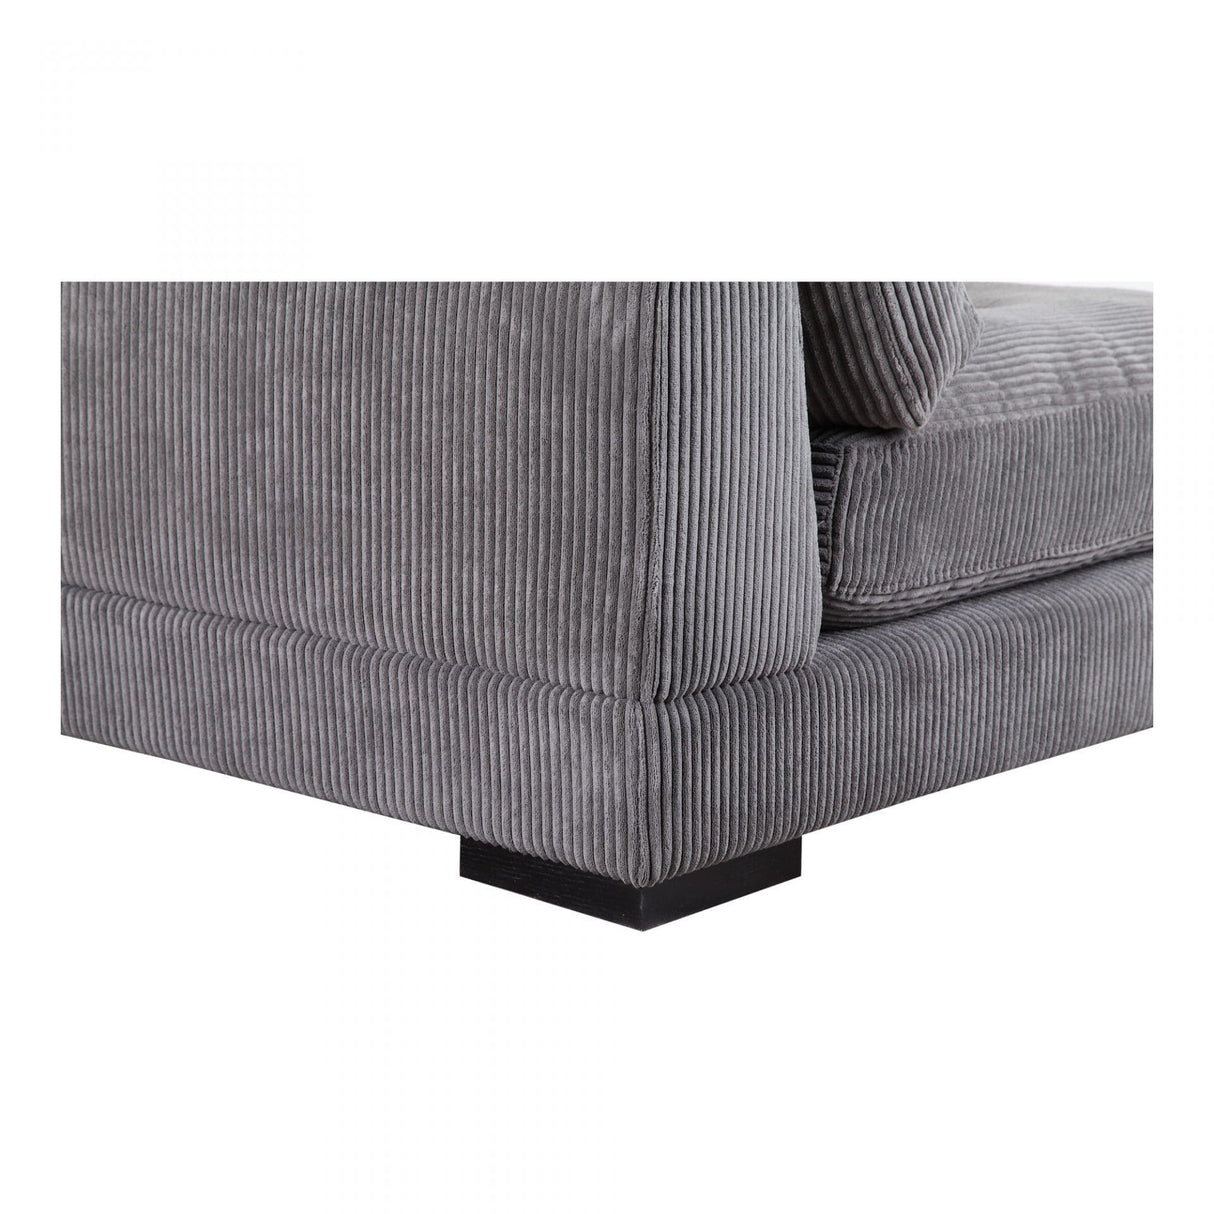 BLU Home Tumble Lounge Modular Sectional - Charcoal Furniture moes-UB-1012-25 840026417457